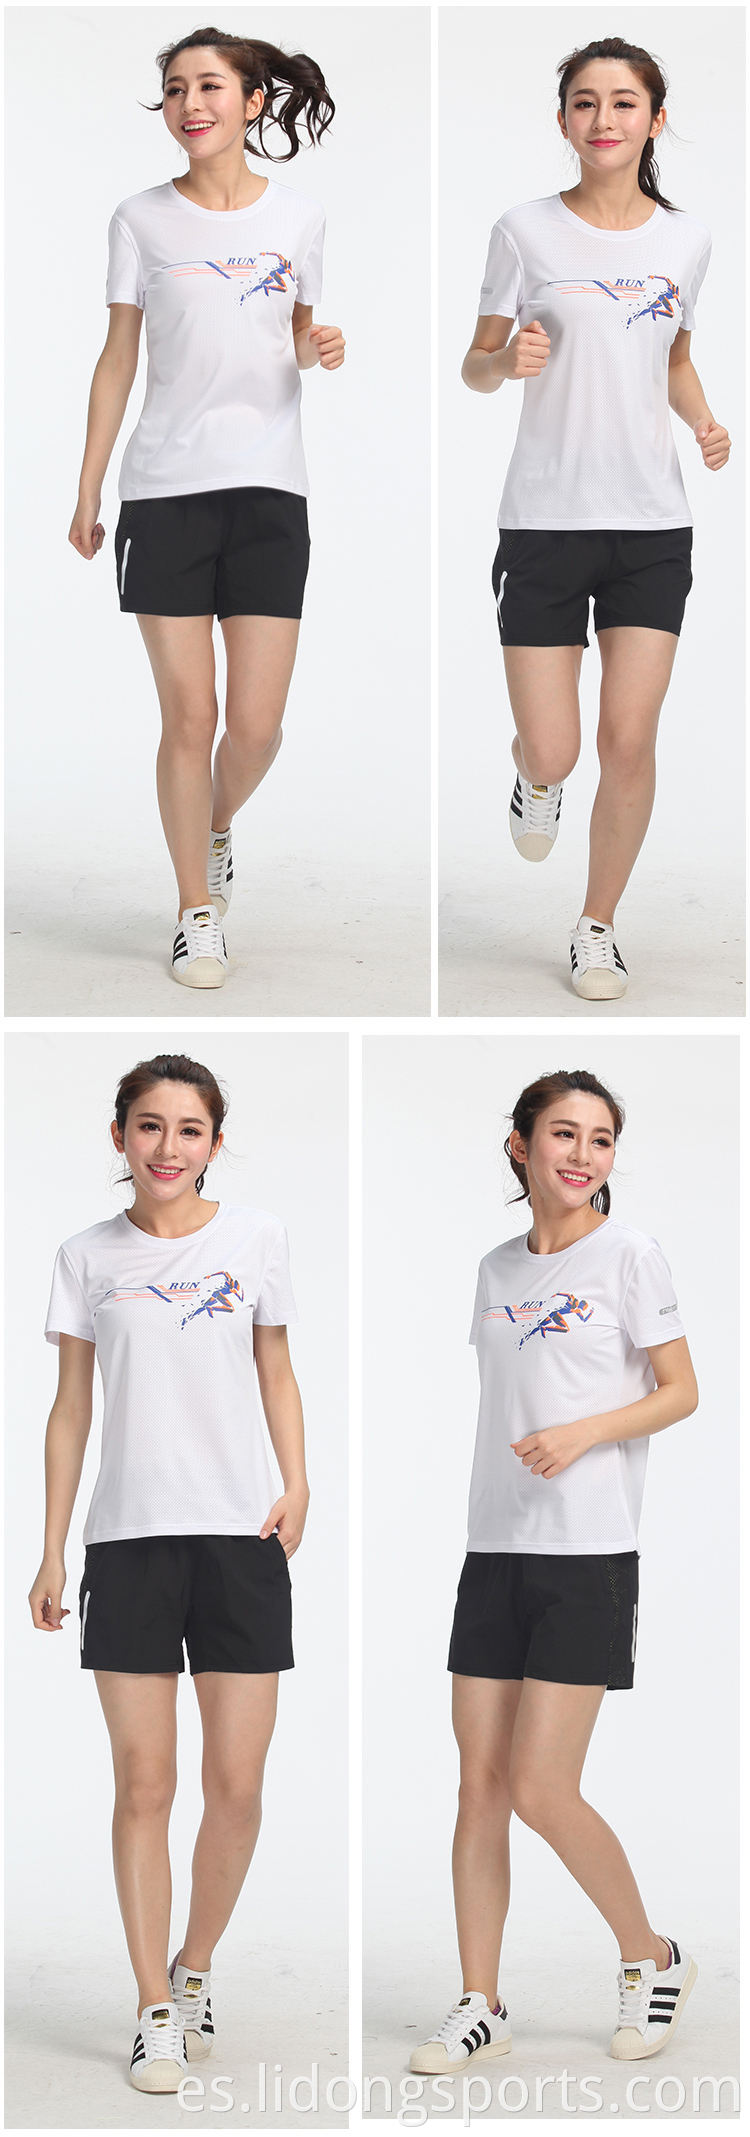 Camiseta de China de China barata Logotipo personalizado Hombres Sport Camiseta impresa